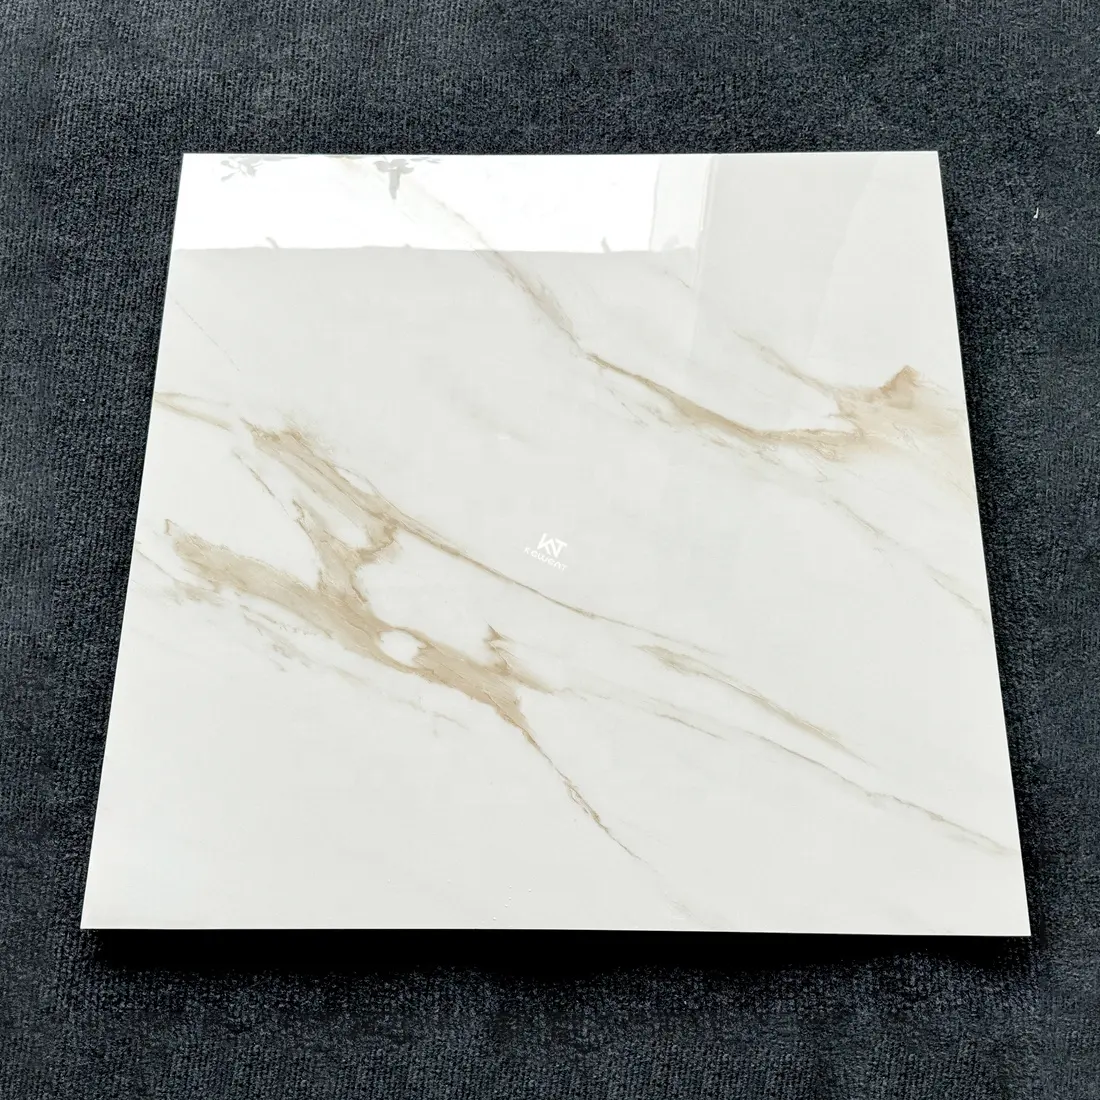 60x60 Full Polished White Marble Ceramic Porcelain Tiles Flooring High Quality